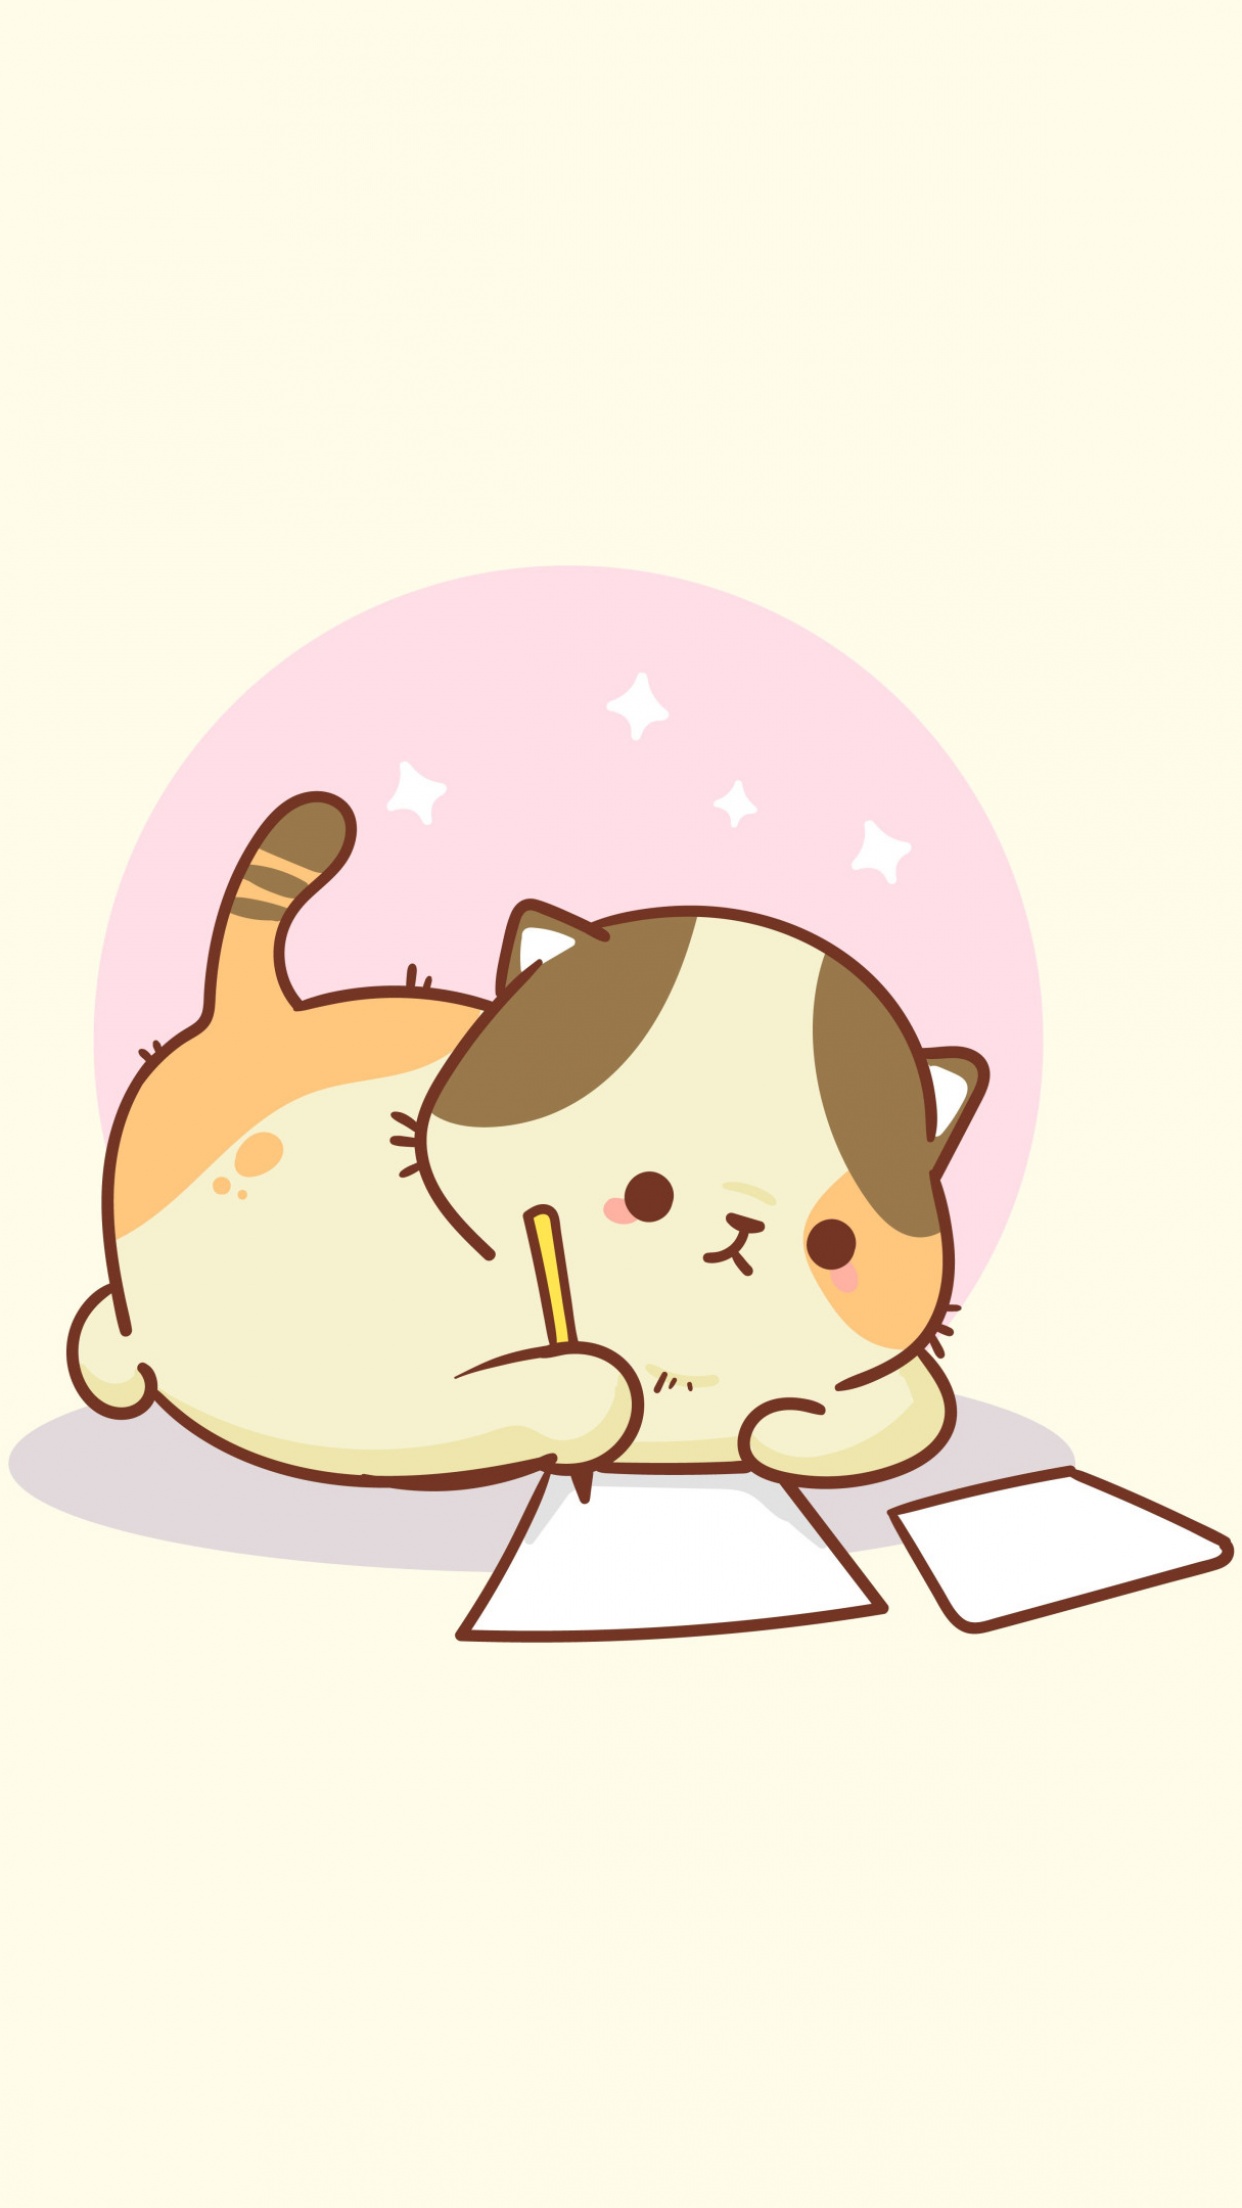  Kawaii Chibi CatsWallpapers Full HD Cat Free Wallpapers Free Download